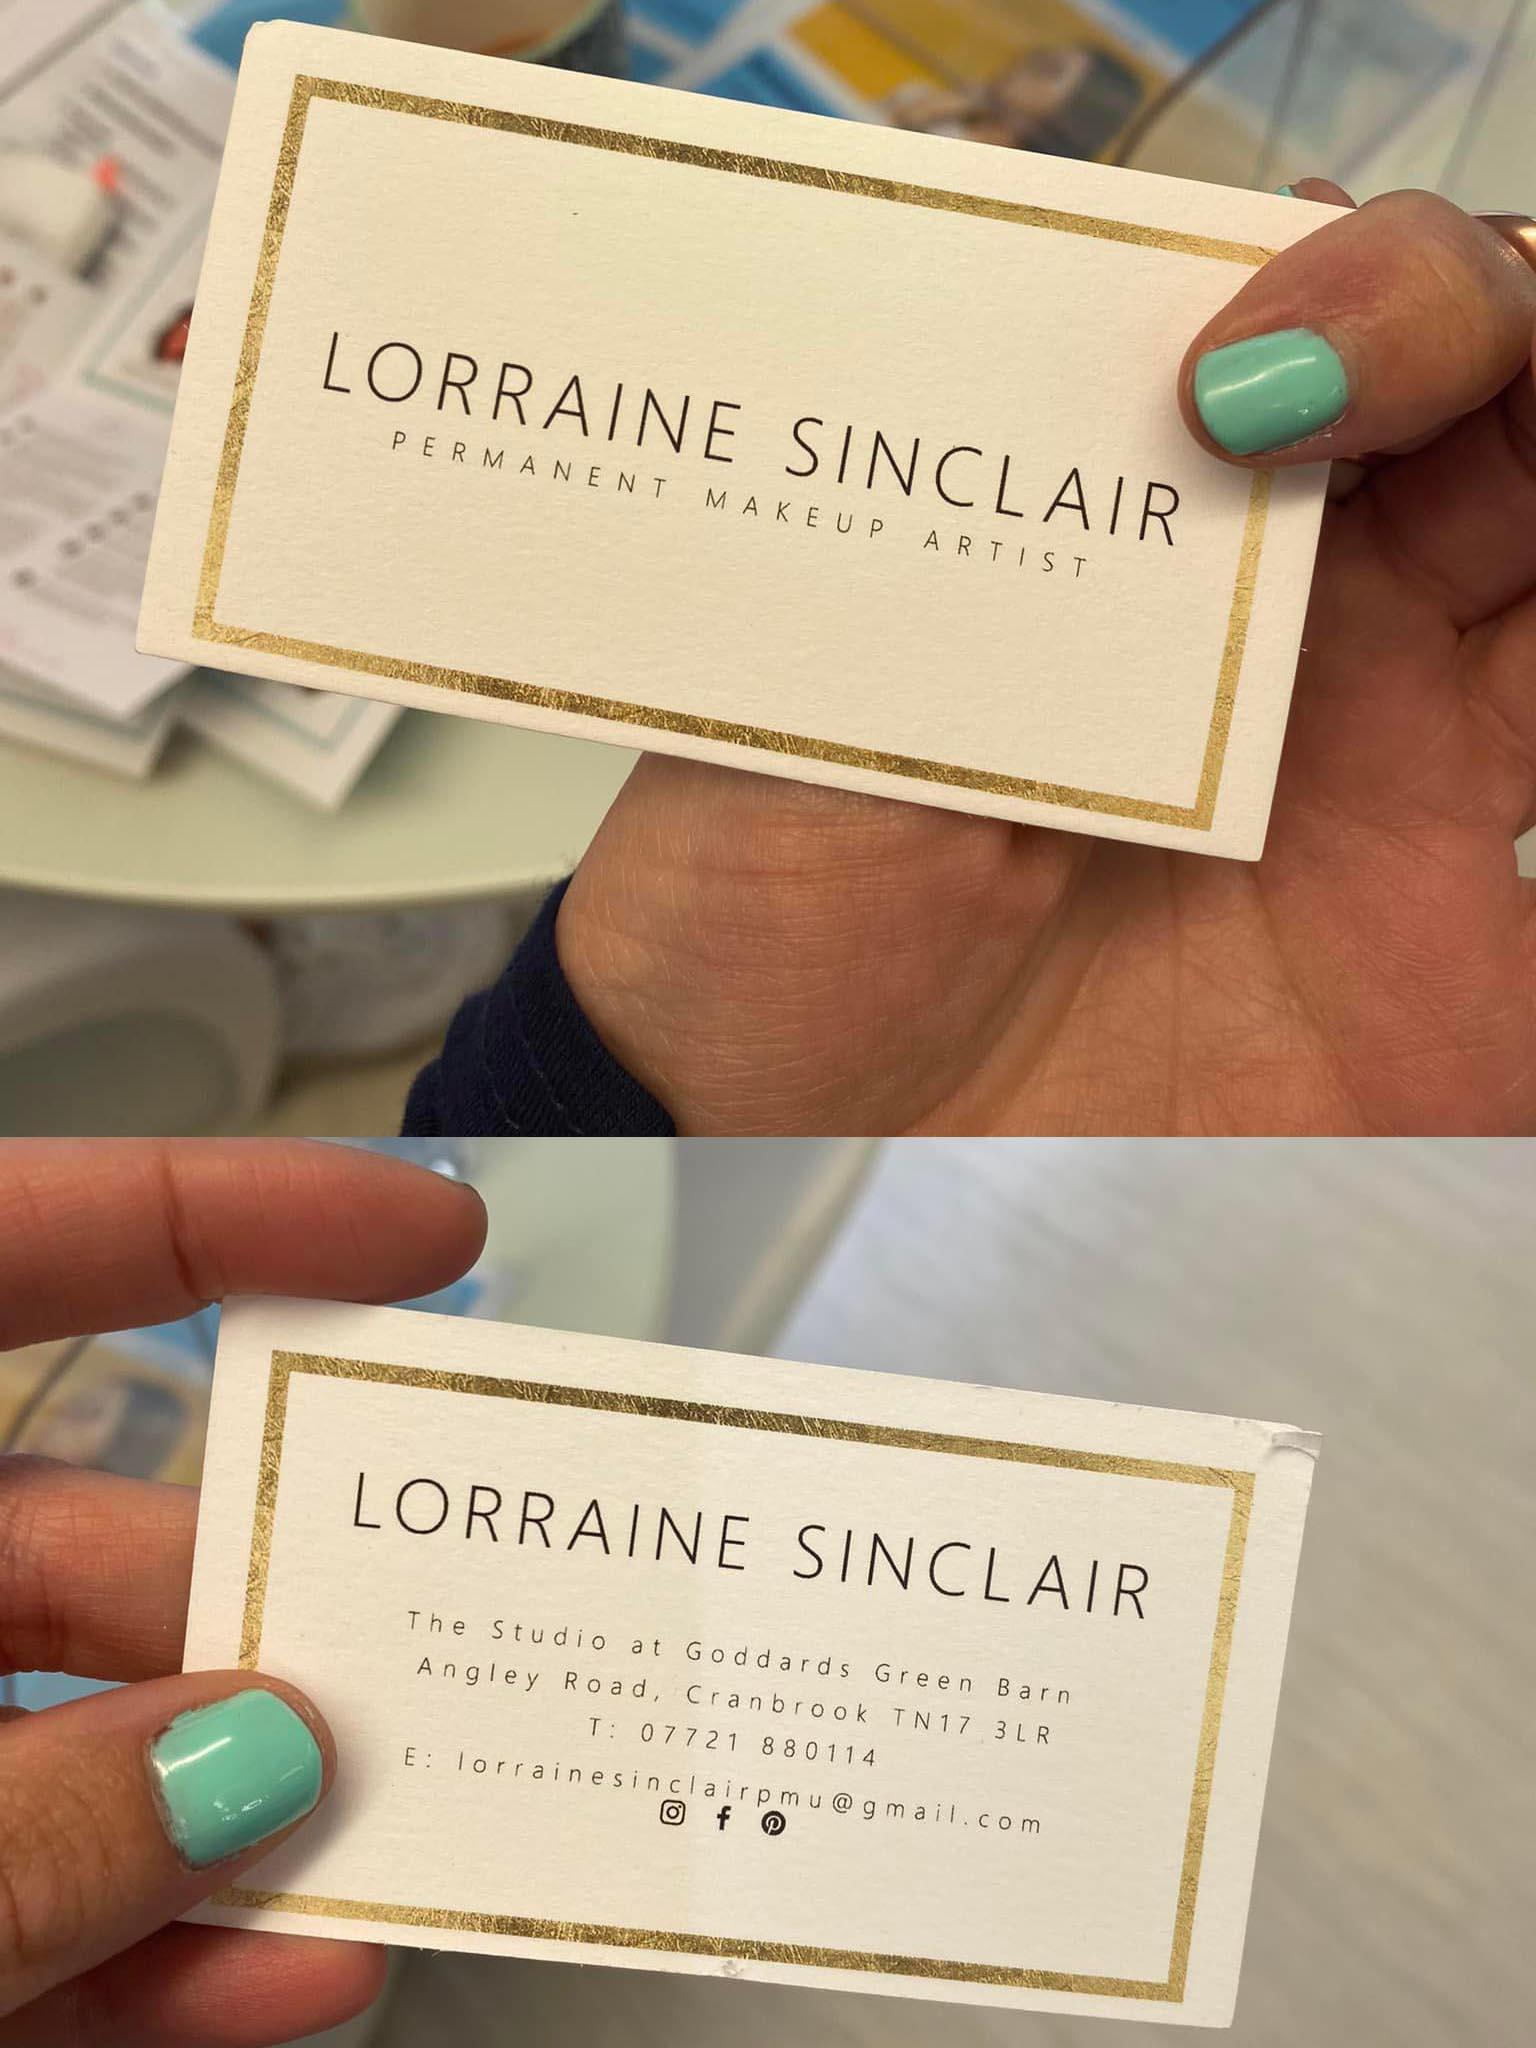 Lorraine's Permanent Makeup Business Card